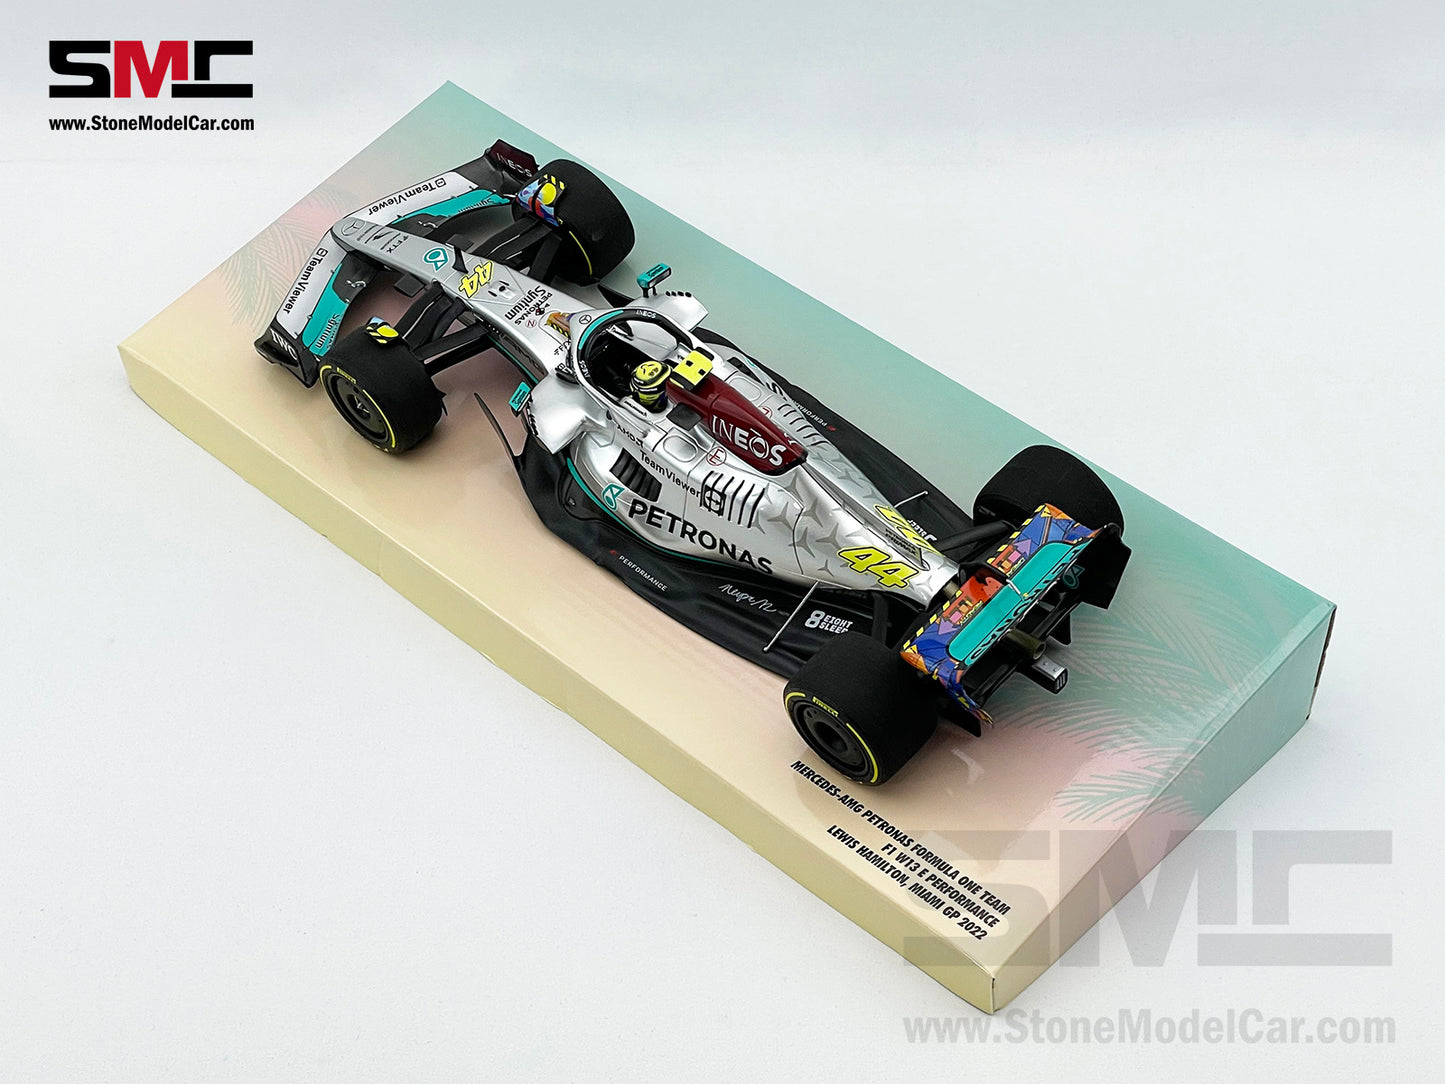 2022 Mercedes F1 W13 #44 Lewis Hamilton USA Miami GP Special Livery 1:18 MINICHAMPS Gift Box